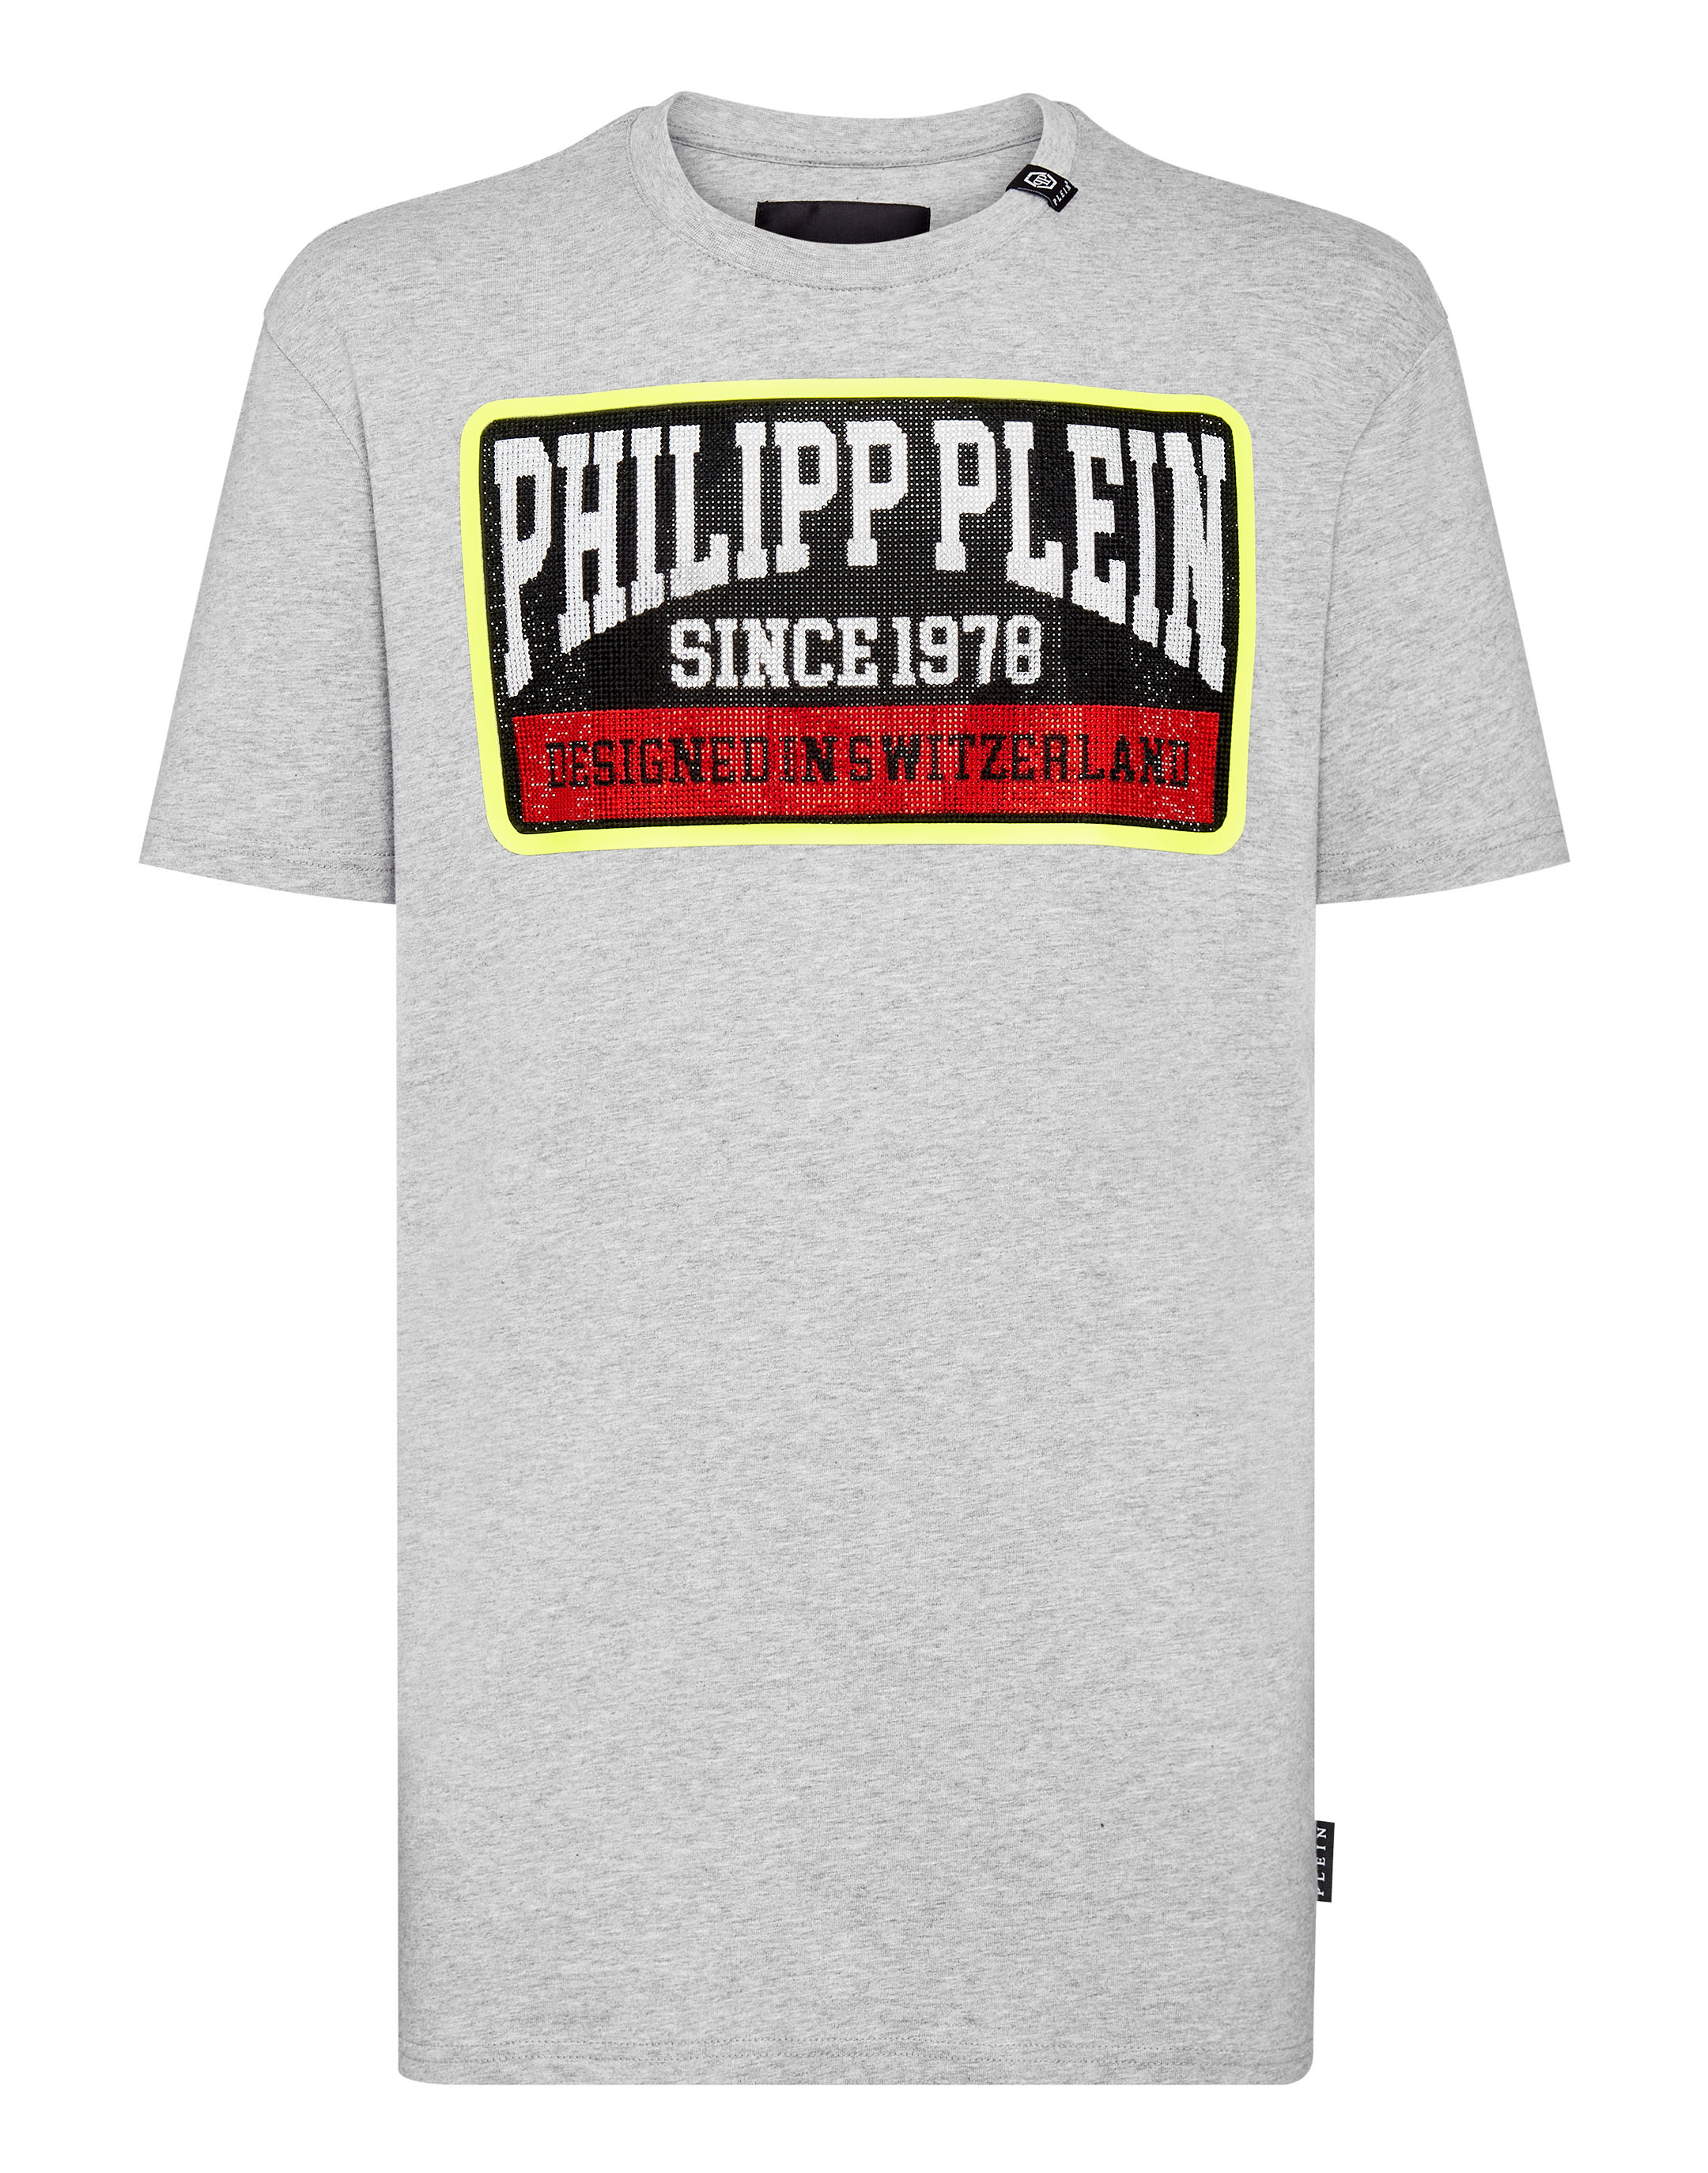 T-shirt Round Neck SS PP1978 | Philipp Plein Outlet